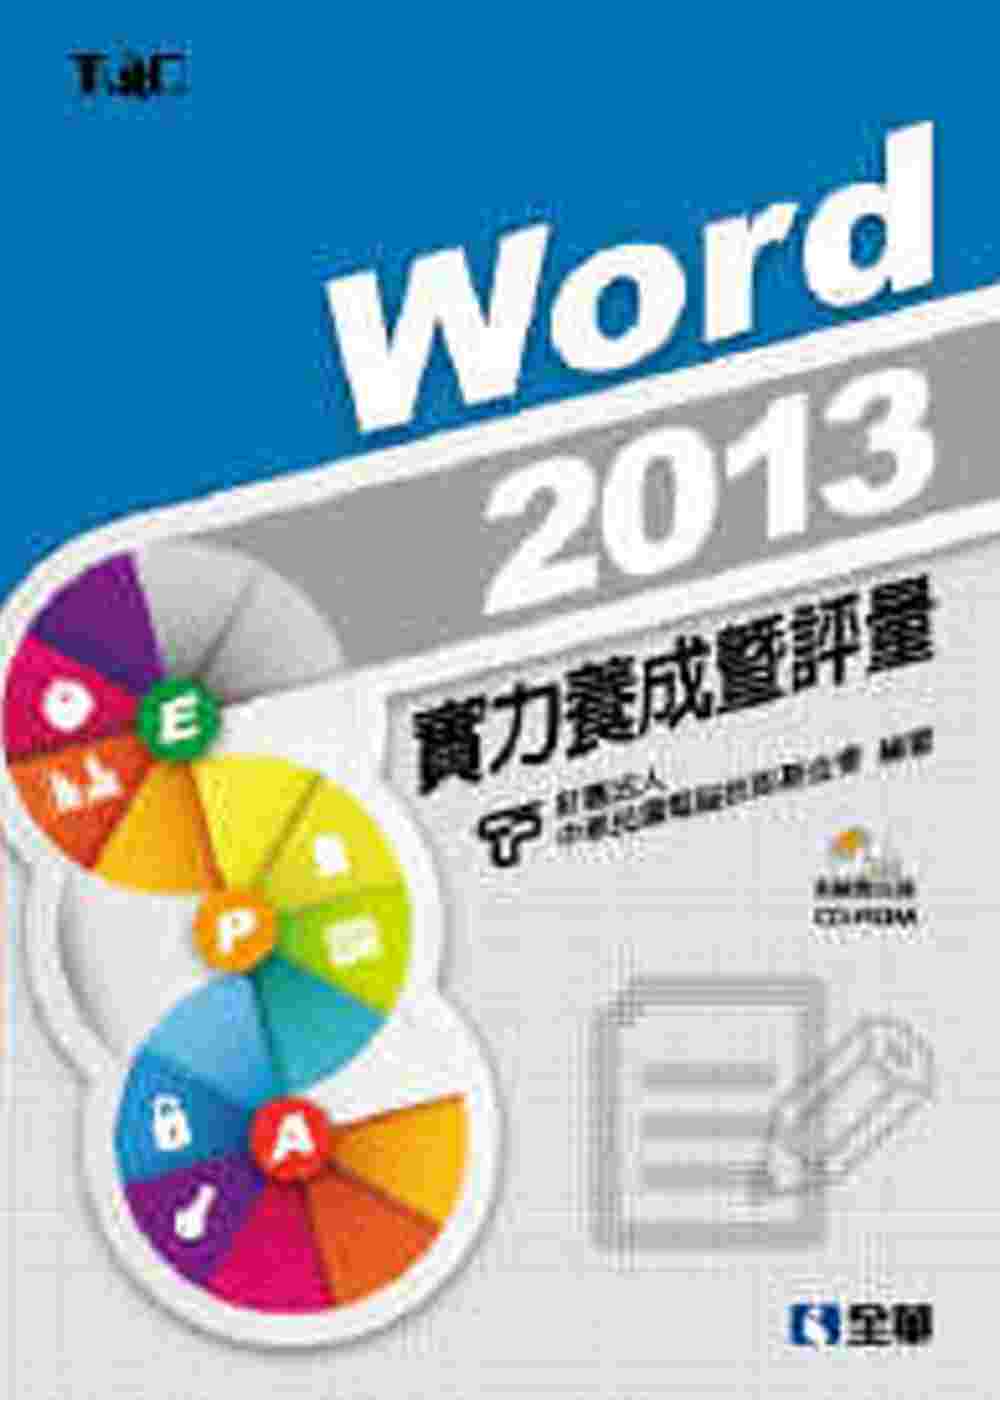 Word 2013實力養成暨評量（附練習光碟）